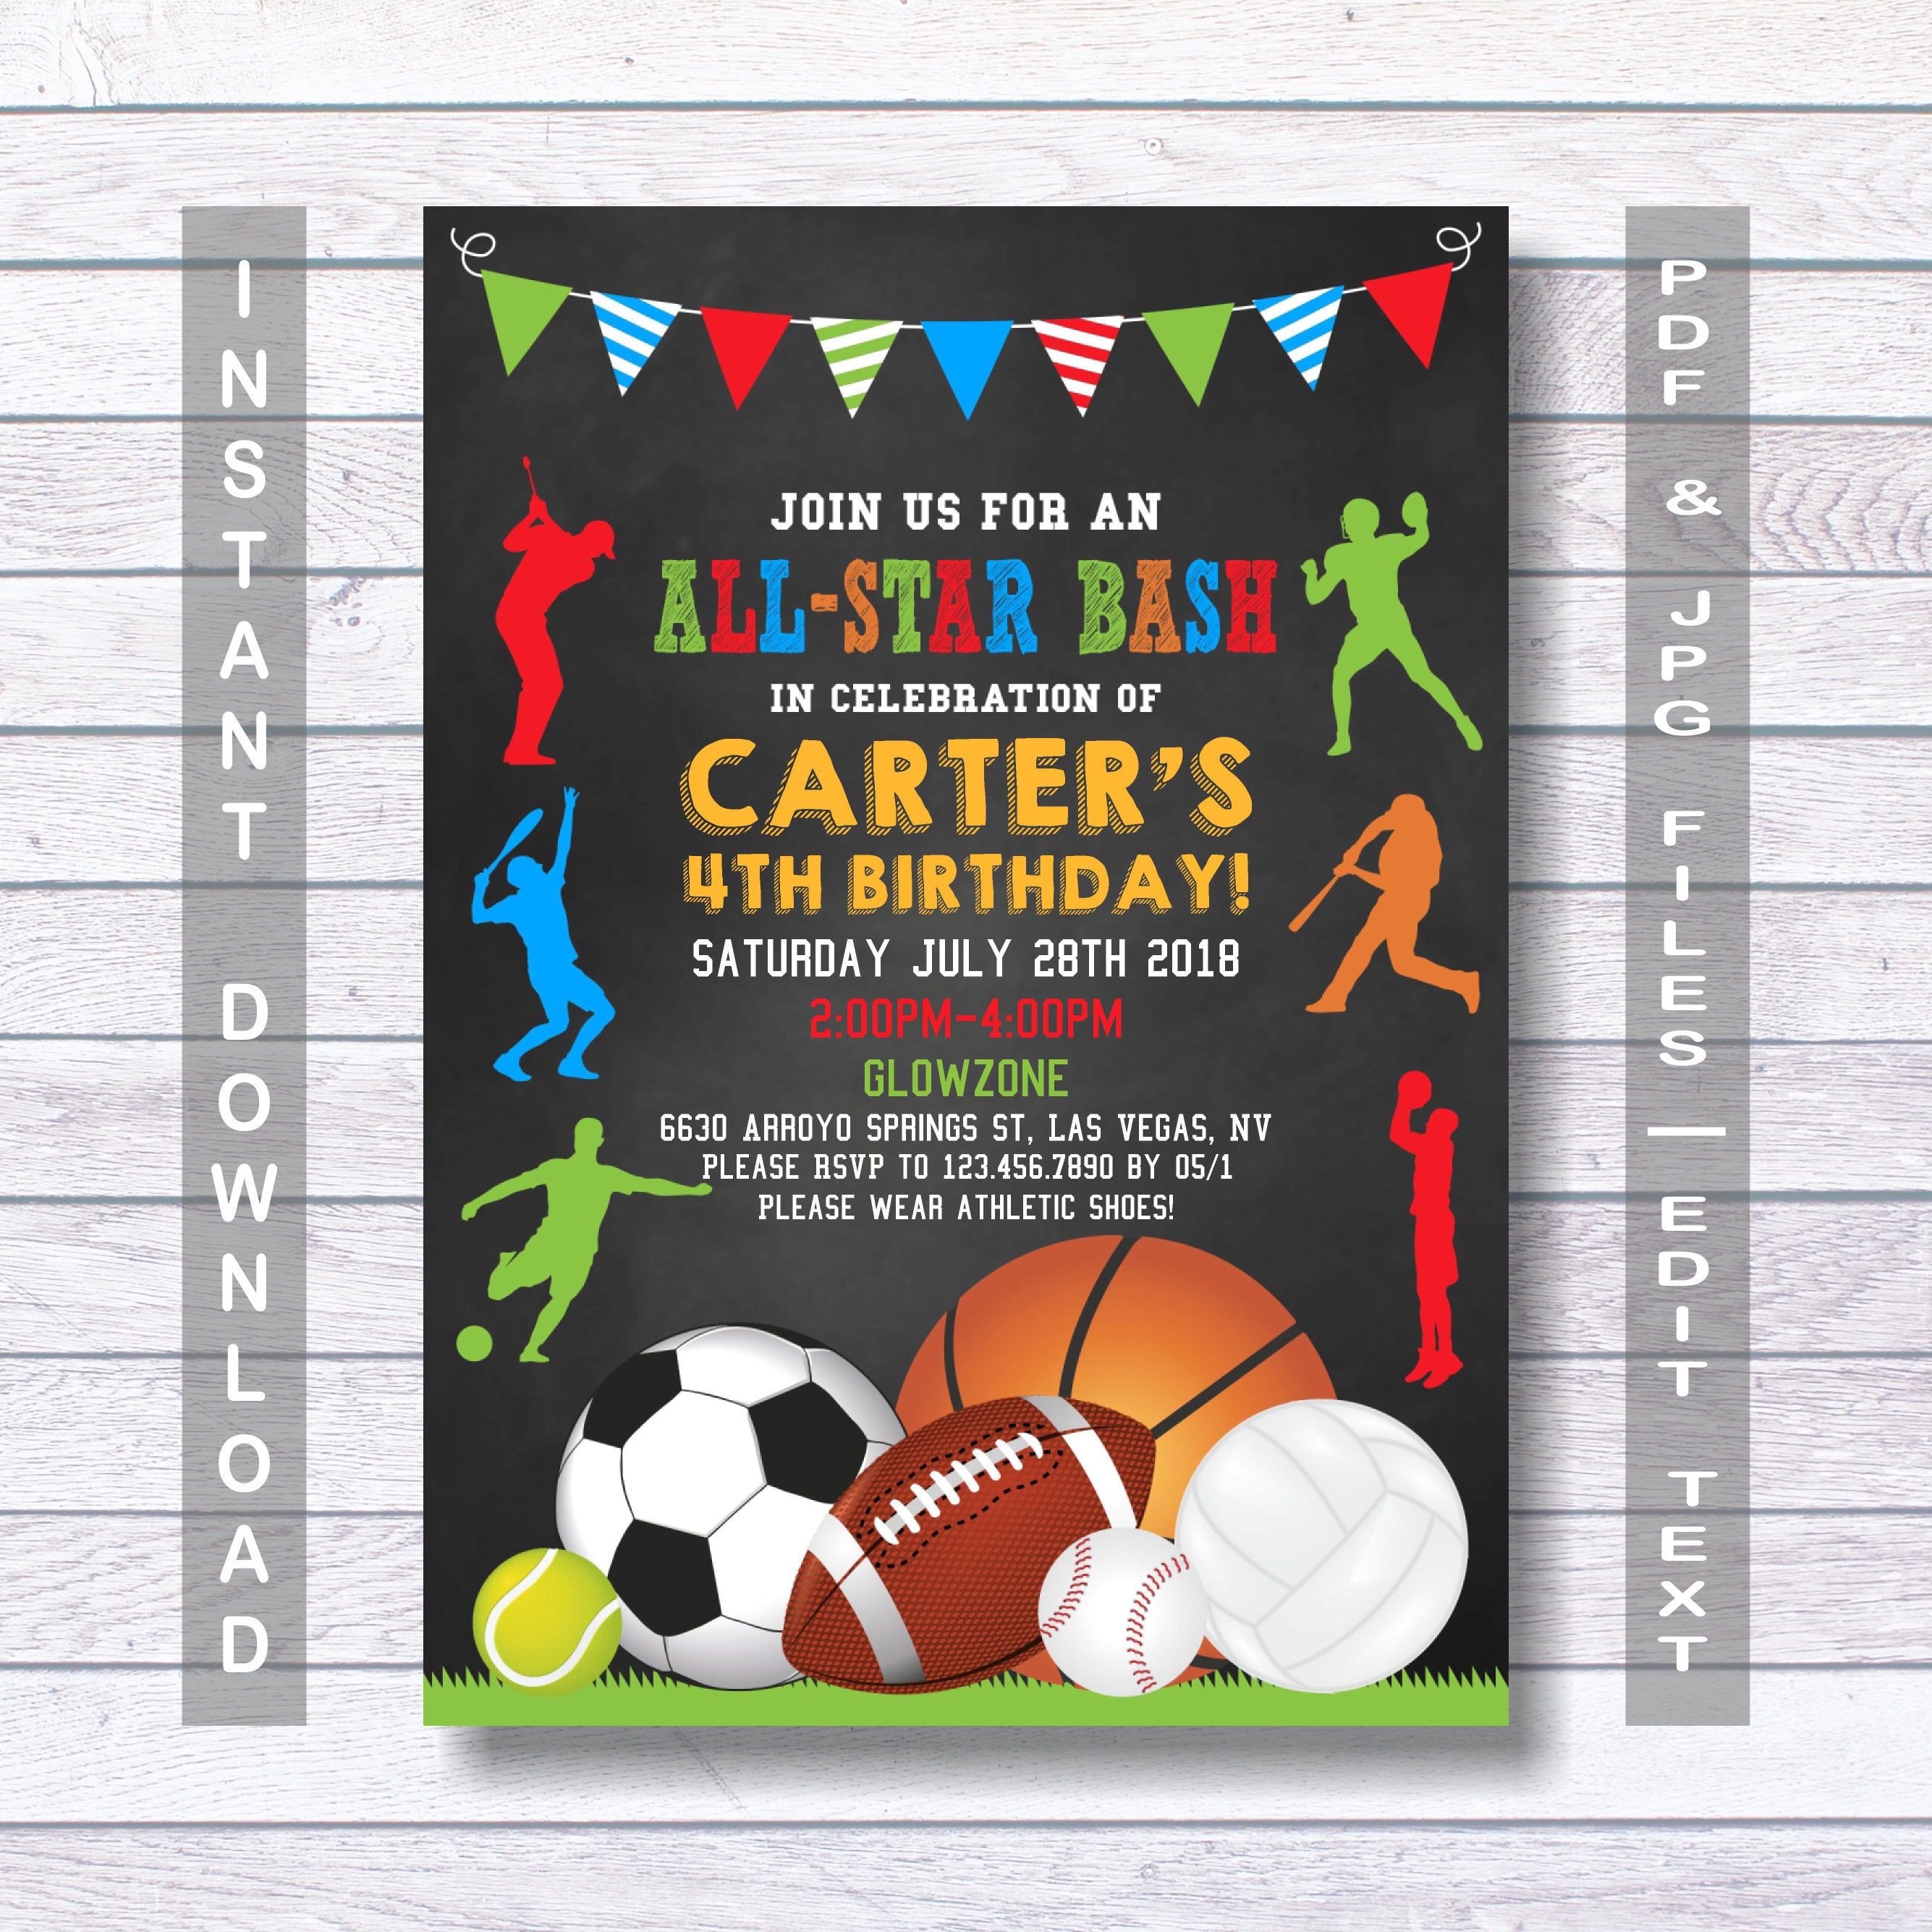 dinywageman-sports-birthday-invitations